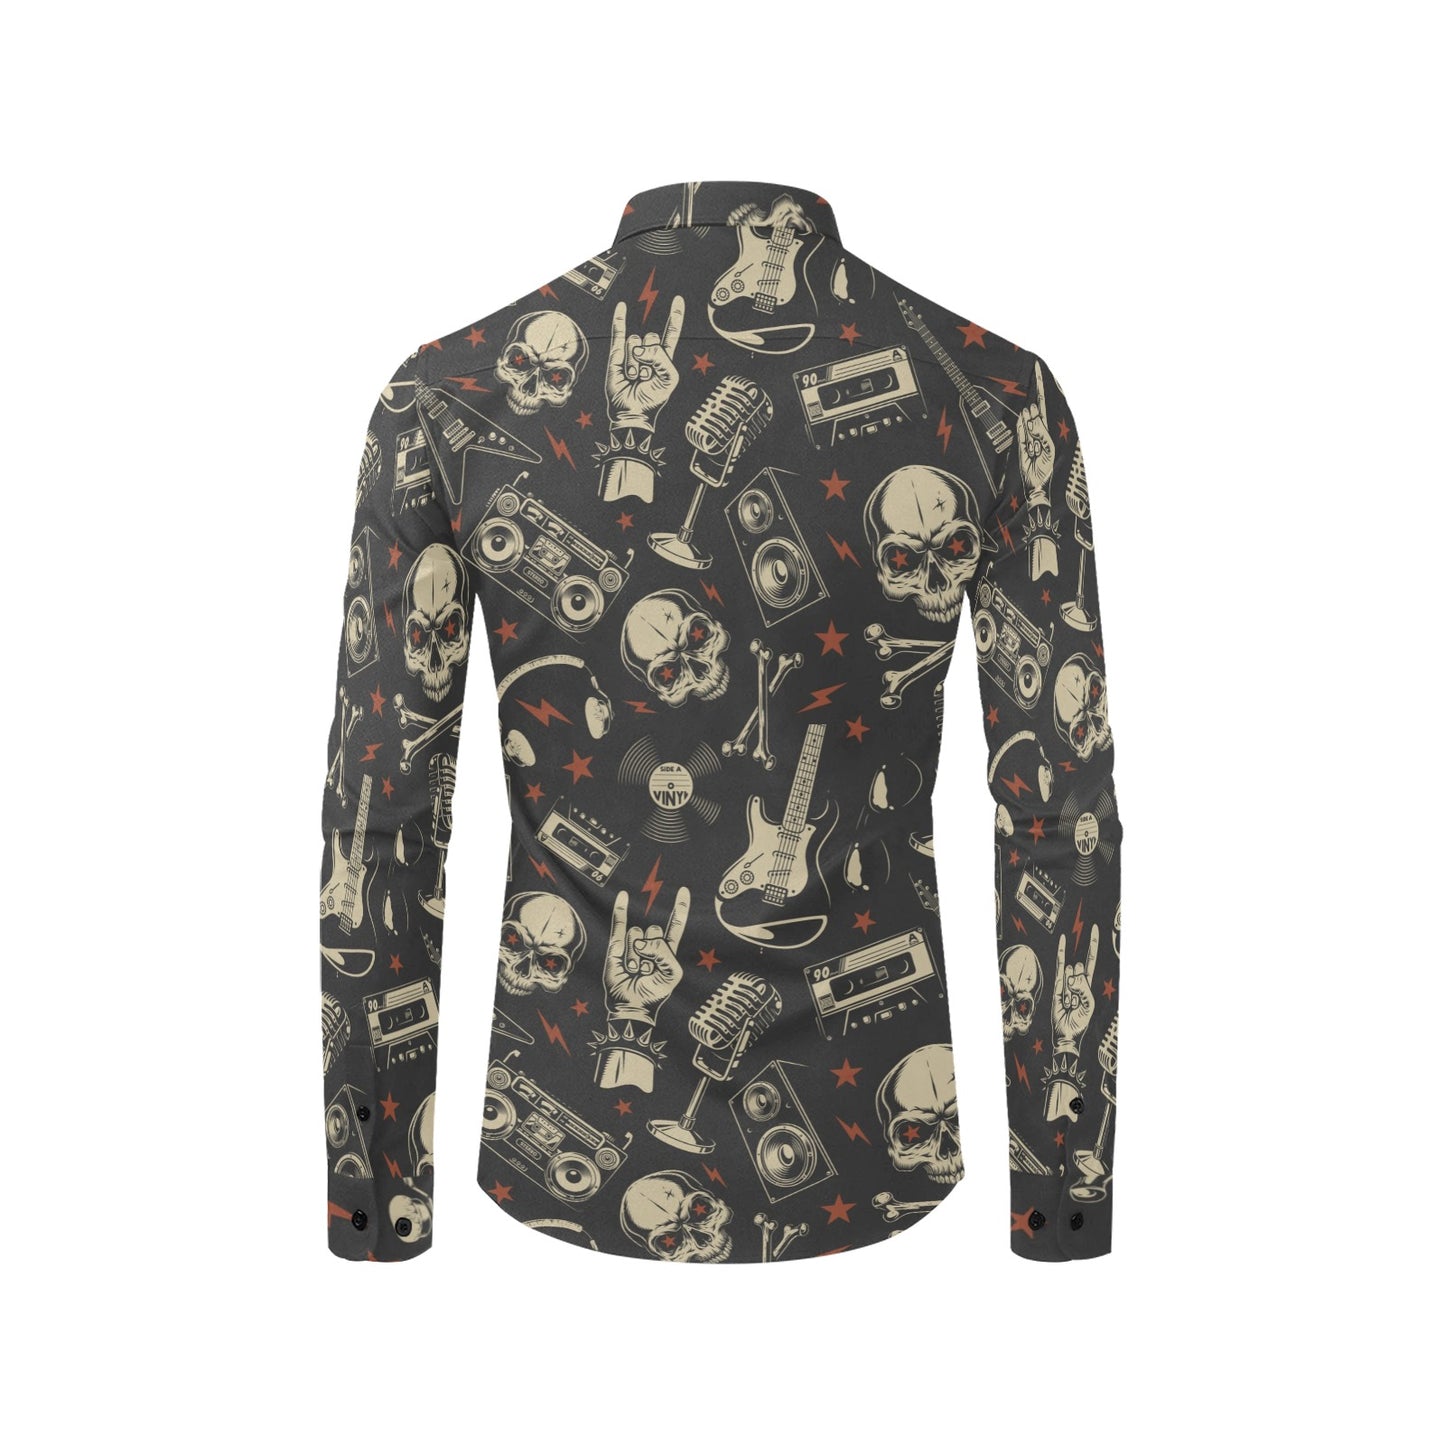 Rock Skull Long Sleeve Men Button Up Shirt, Classic Metal Music Band Guitar Print 80s Buttoned Collar Dress Shirt with Chest Pocket Guys